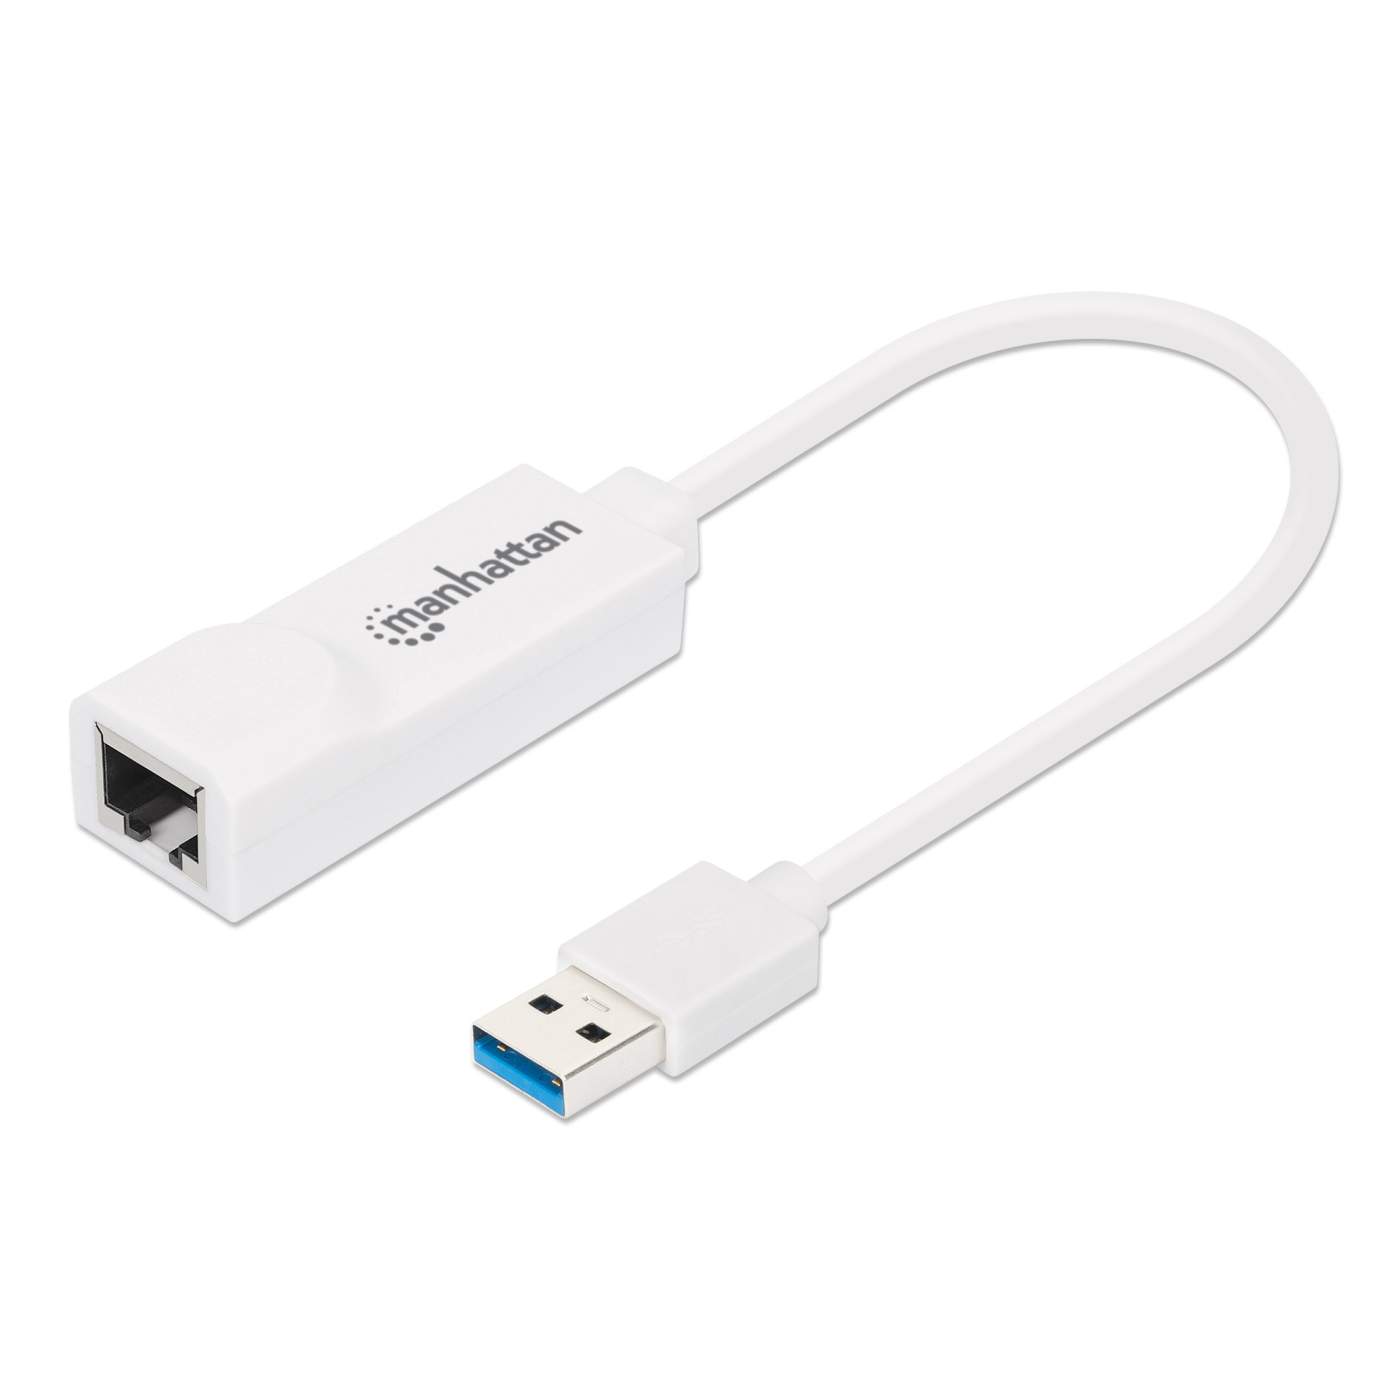 USB 3.0 to Gigabit Network Adapter Image 1